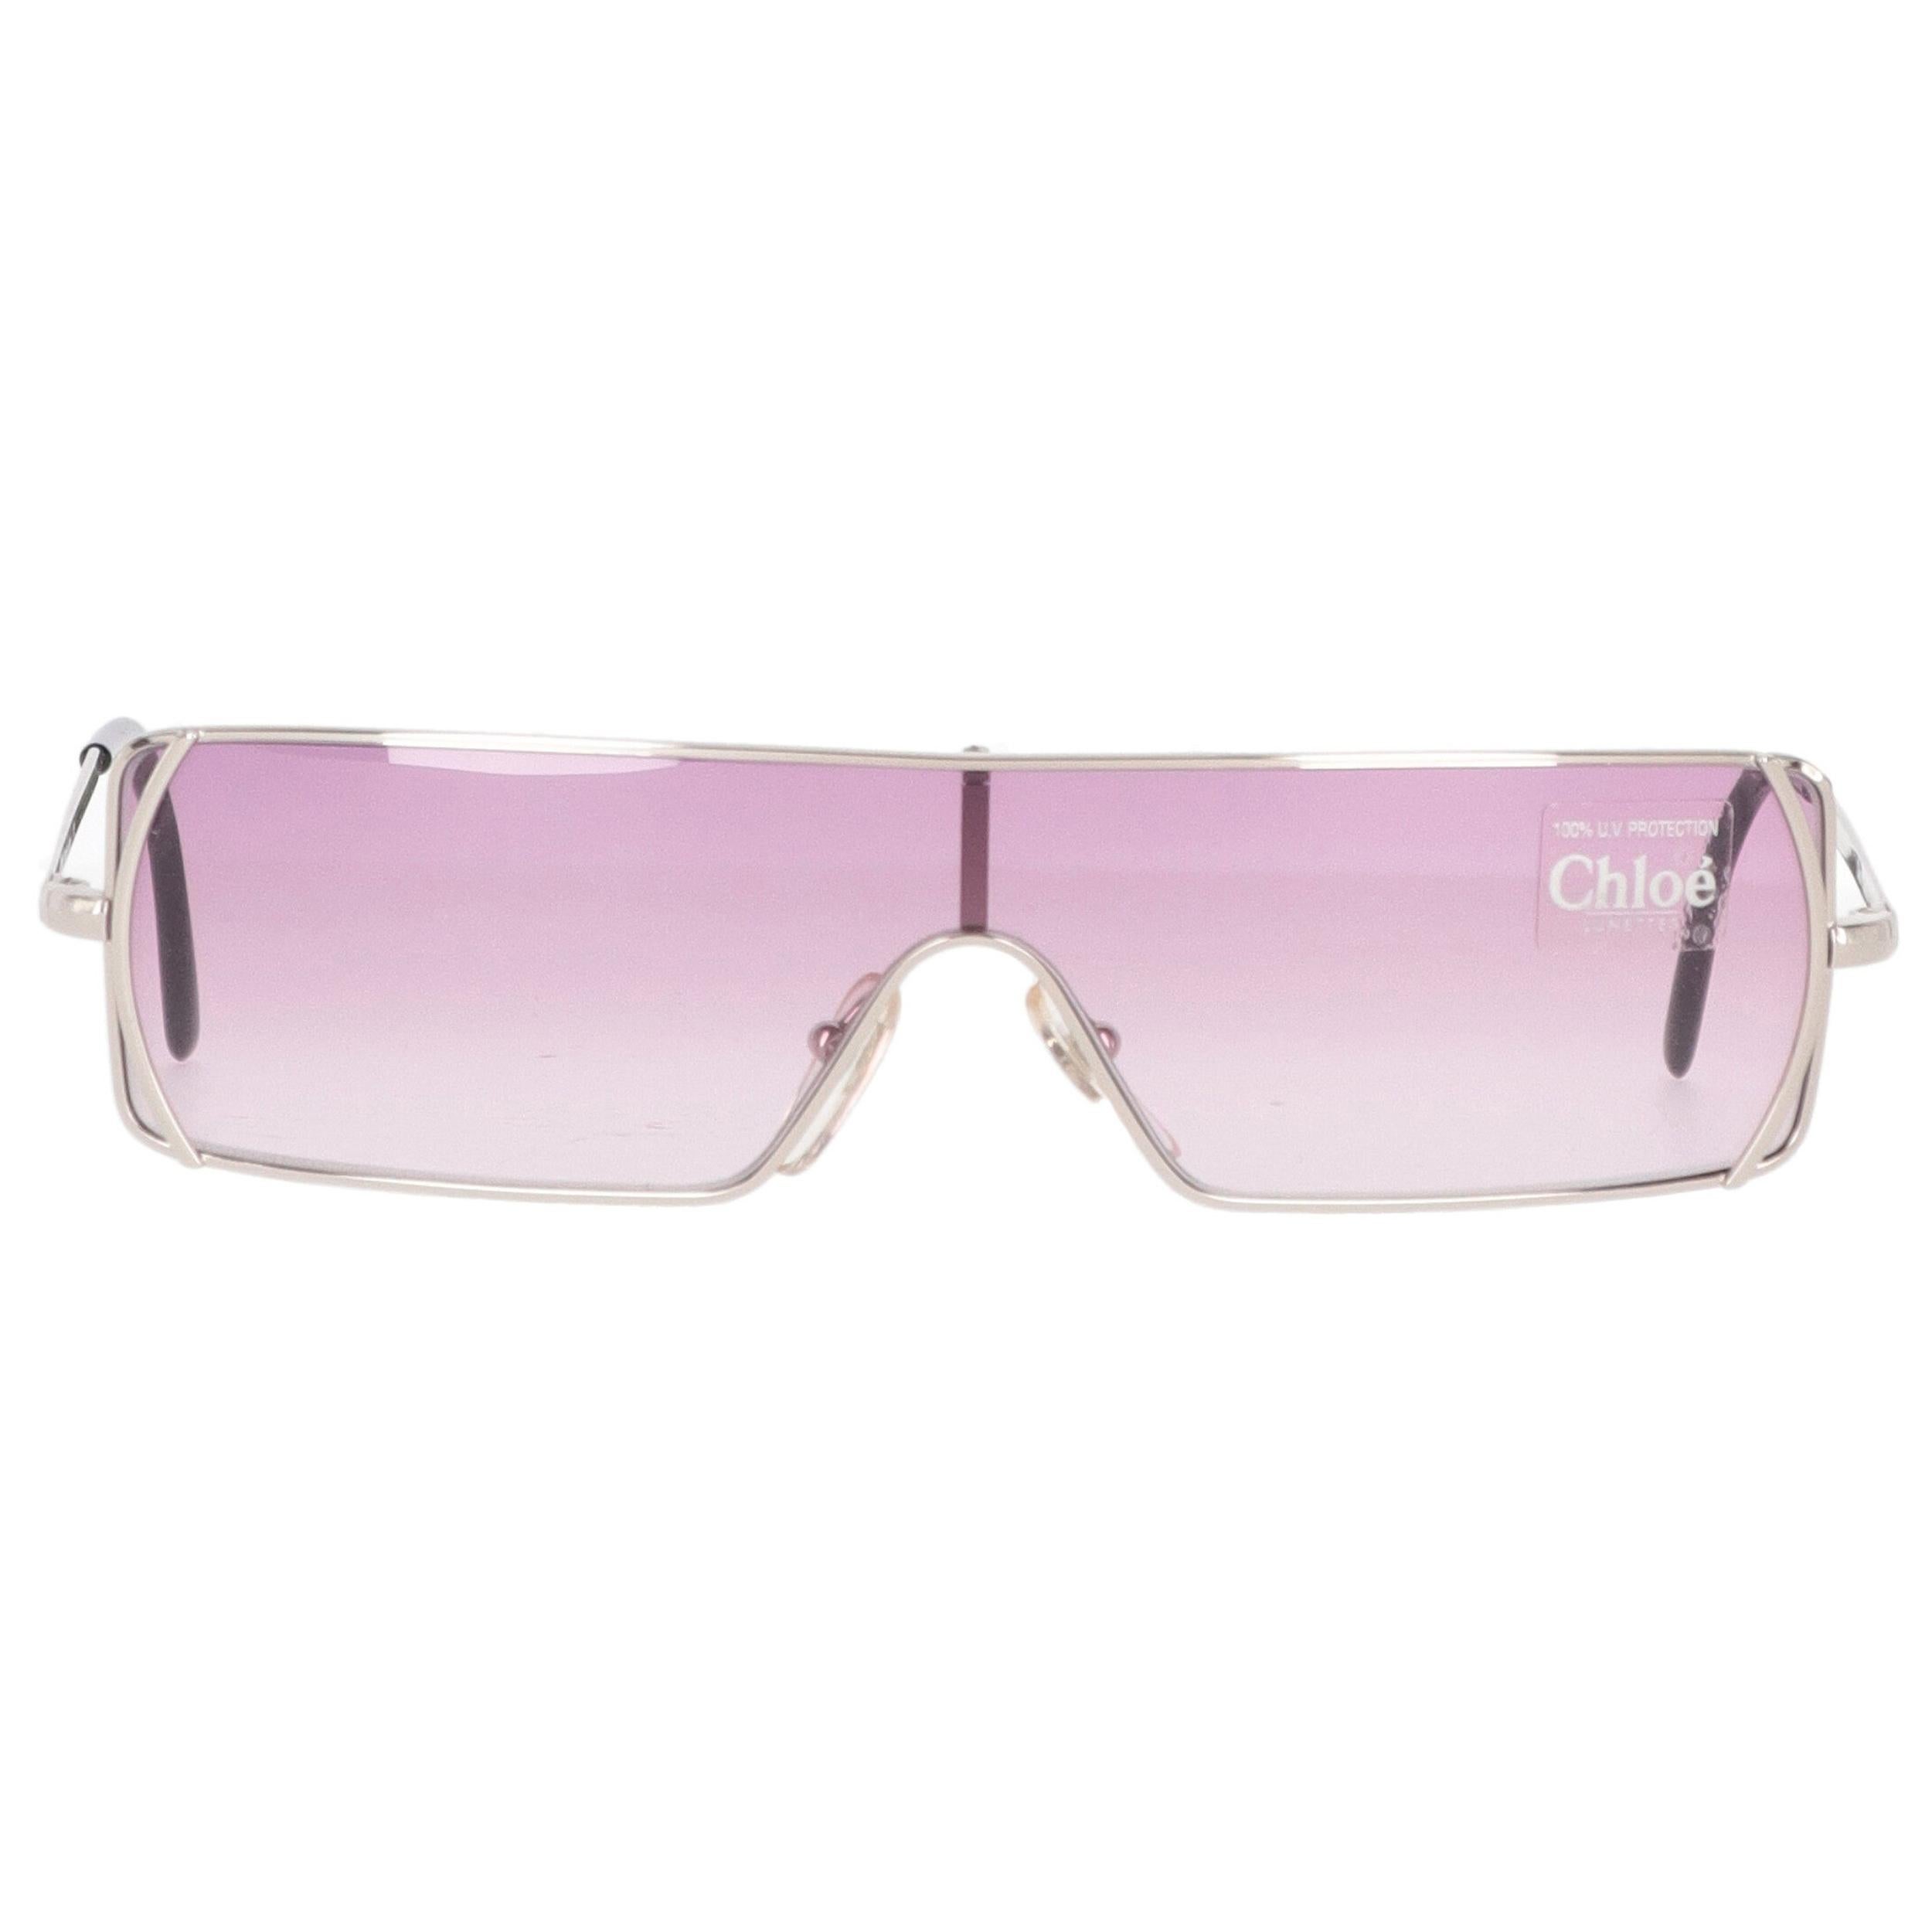 2000s Chloé lilac sunglasses